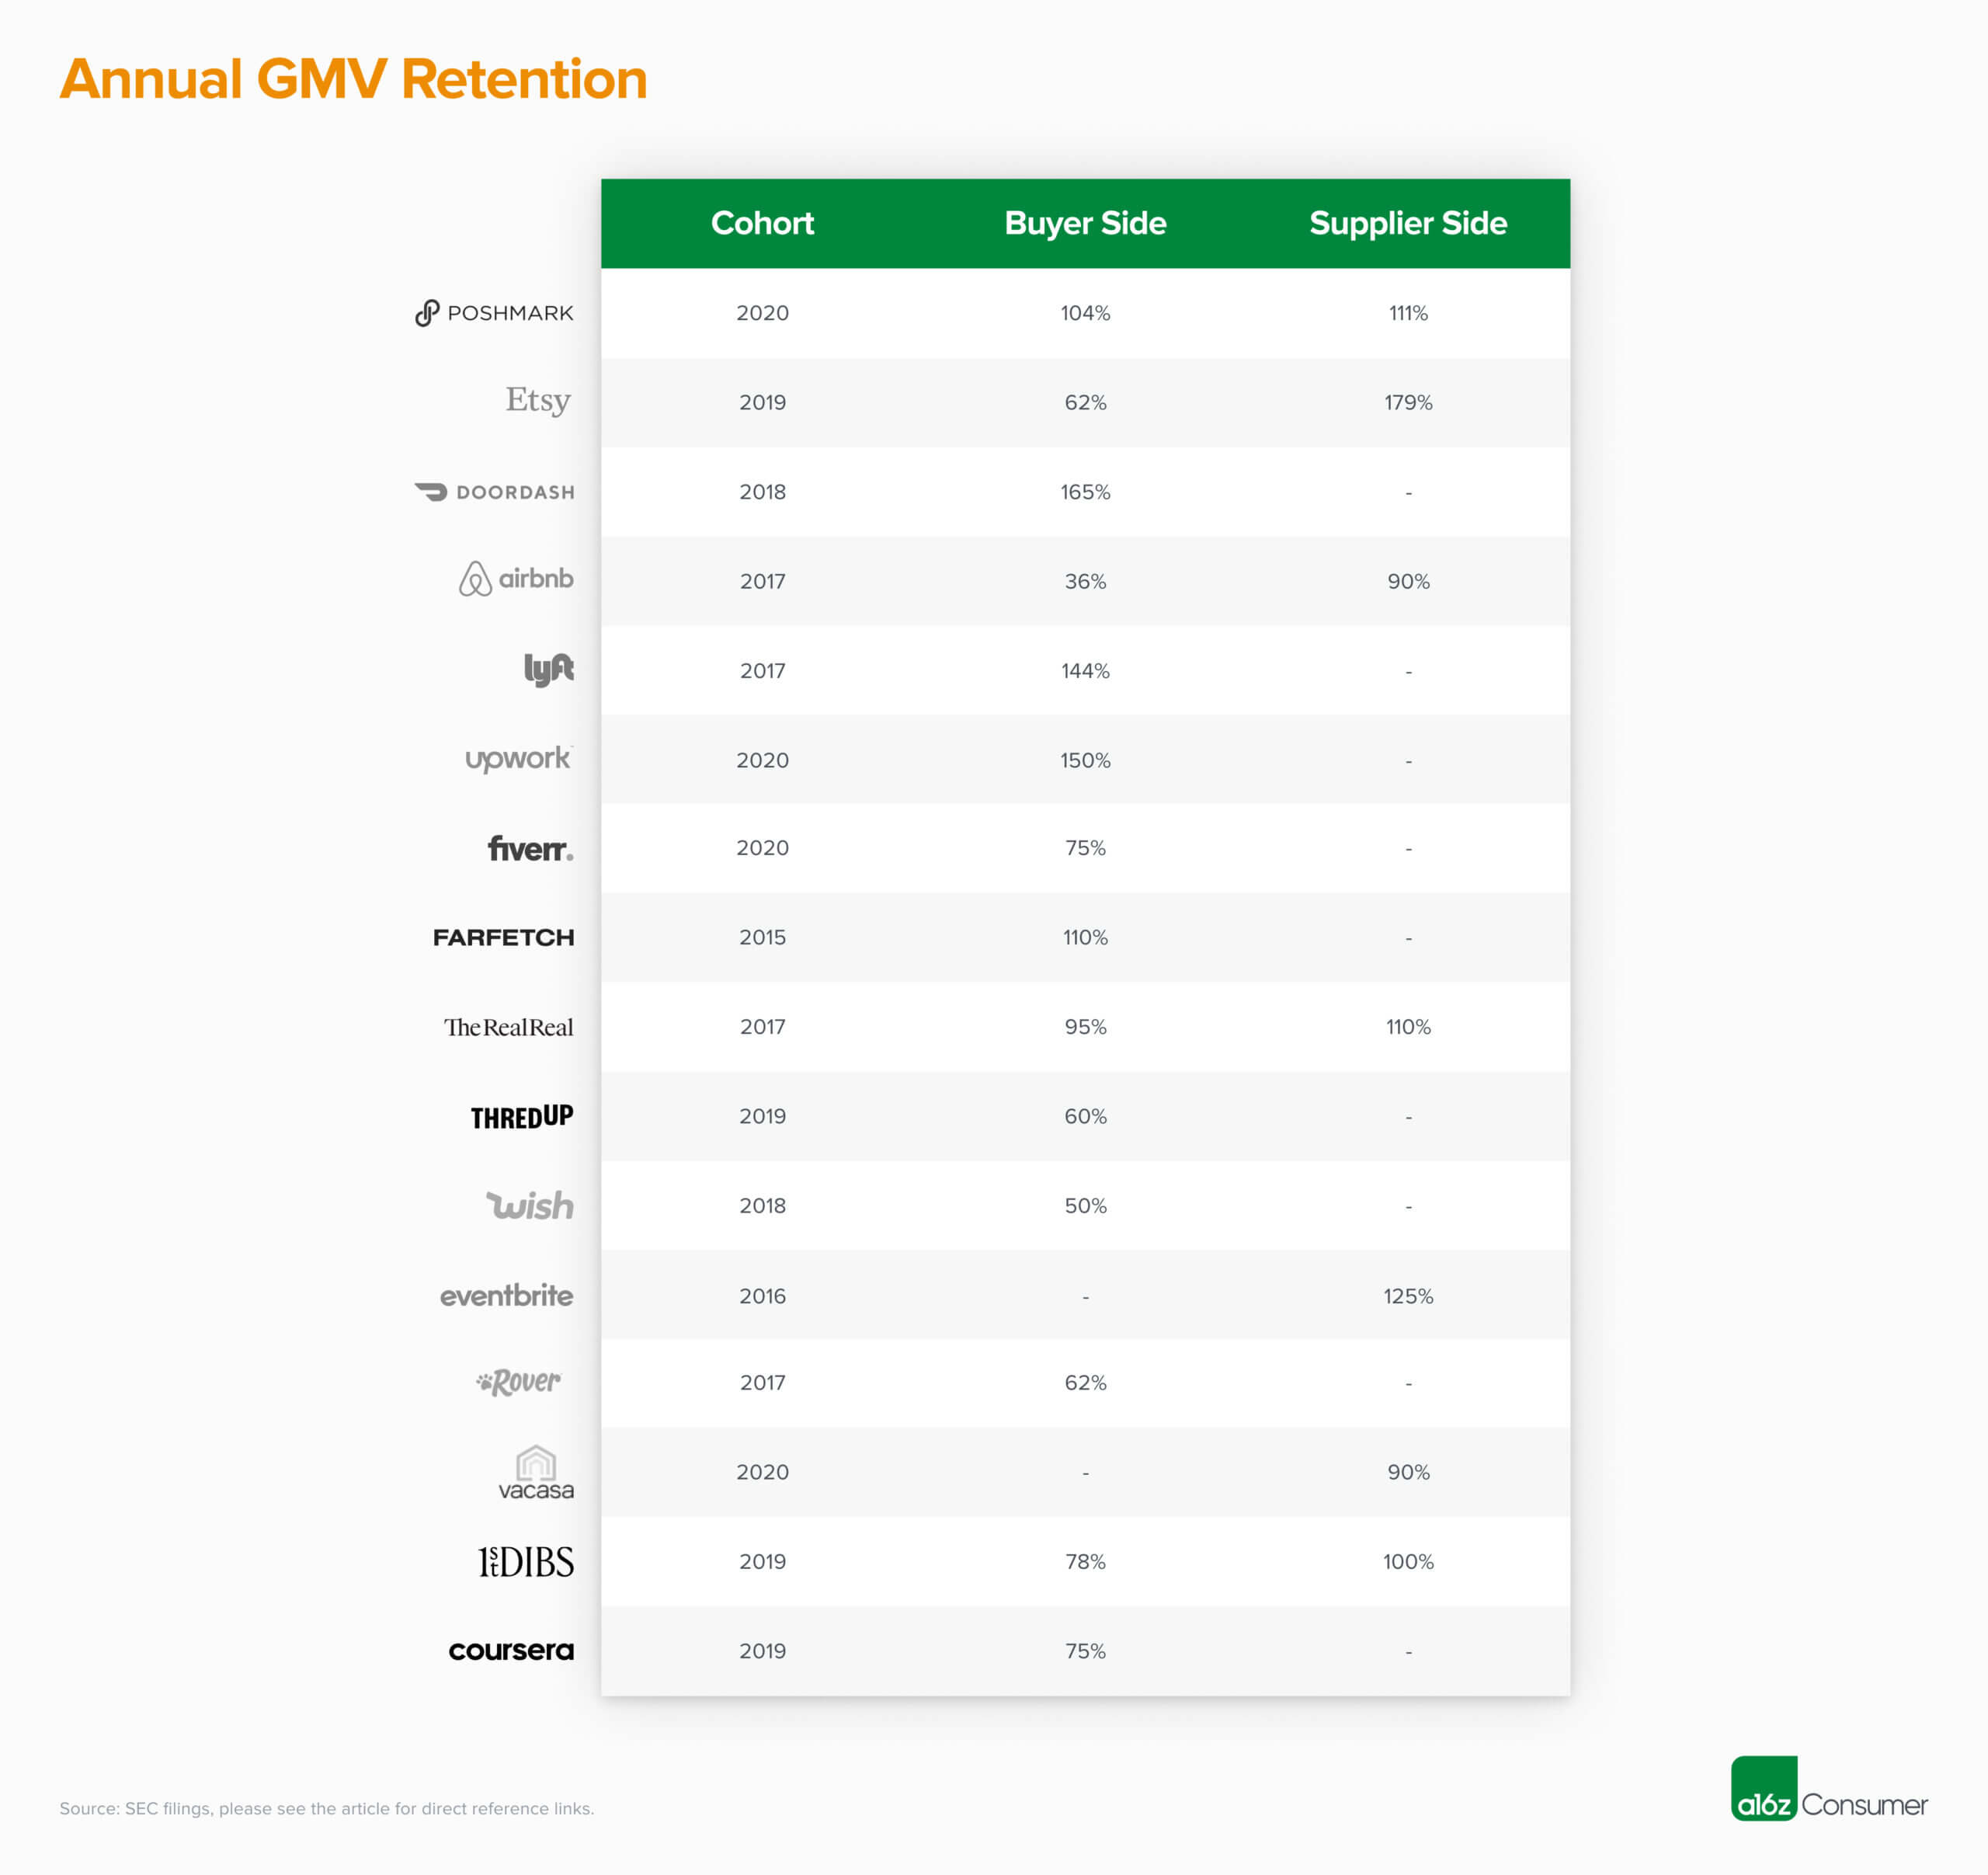 Annual GMV Retention for Public Marketplace Companies